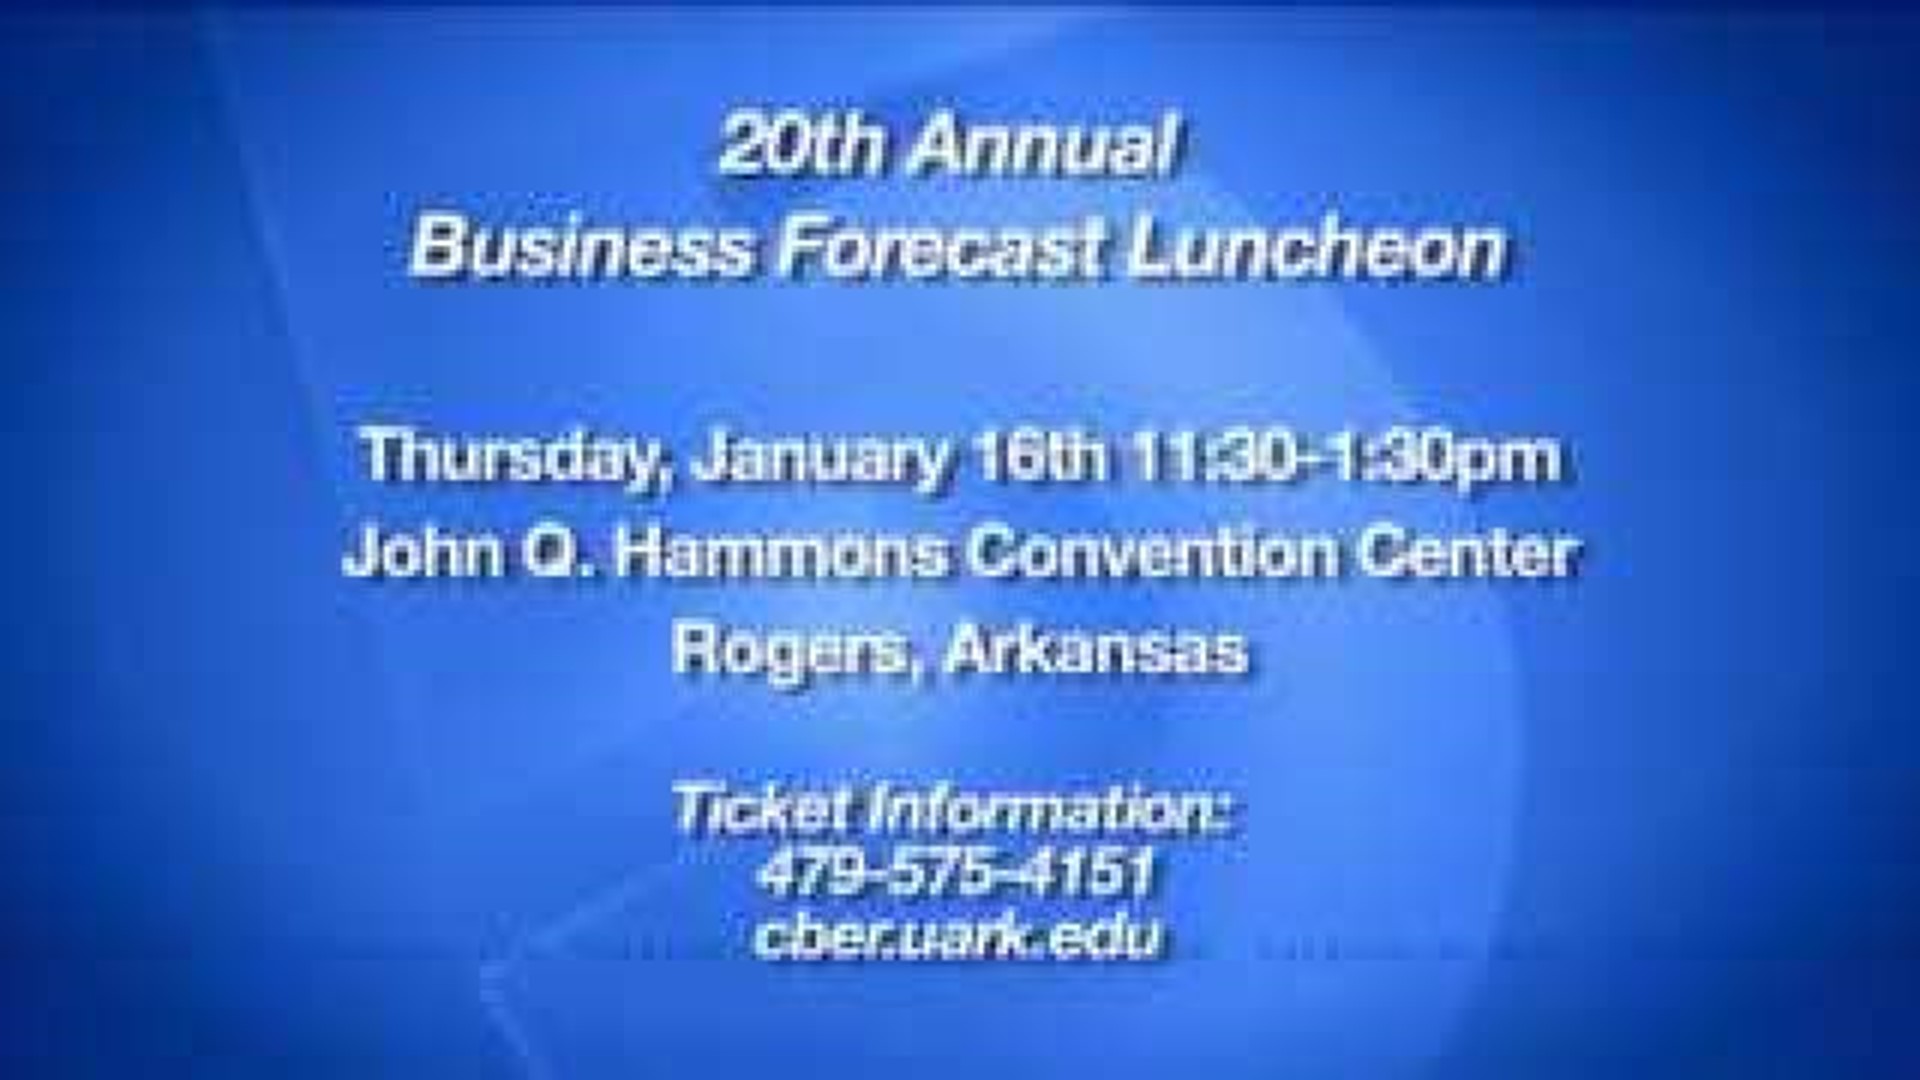 Event to Predict Business Forecast